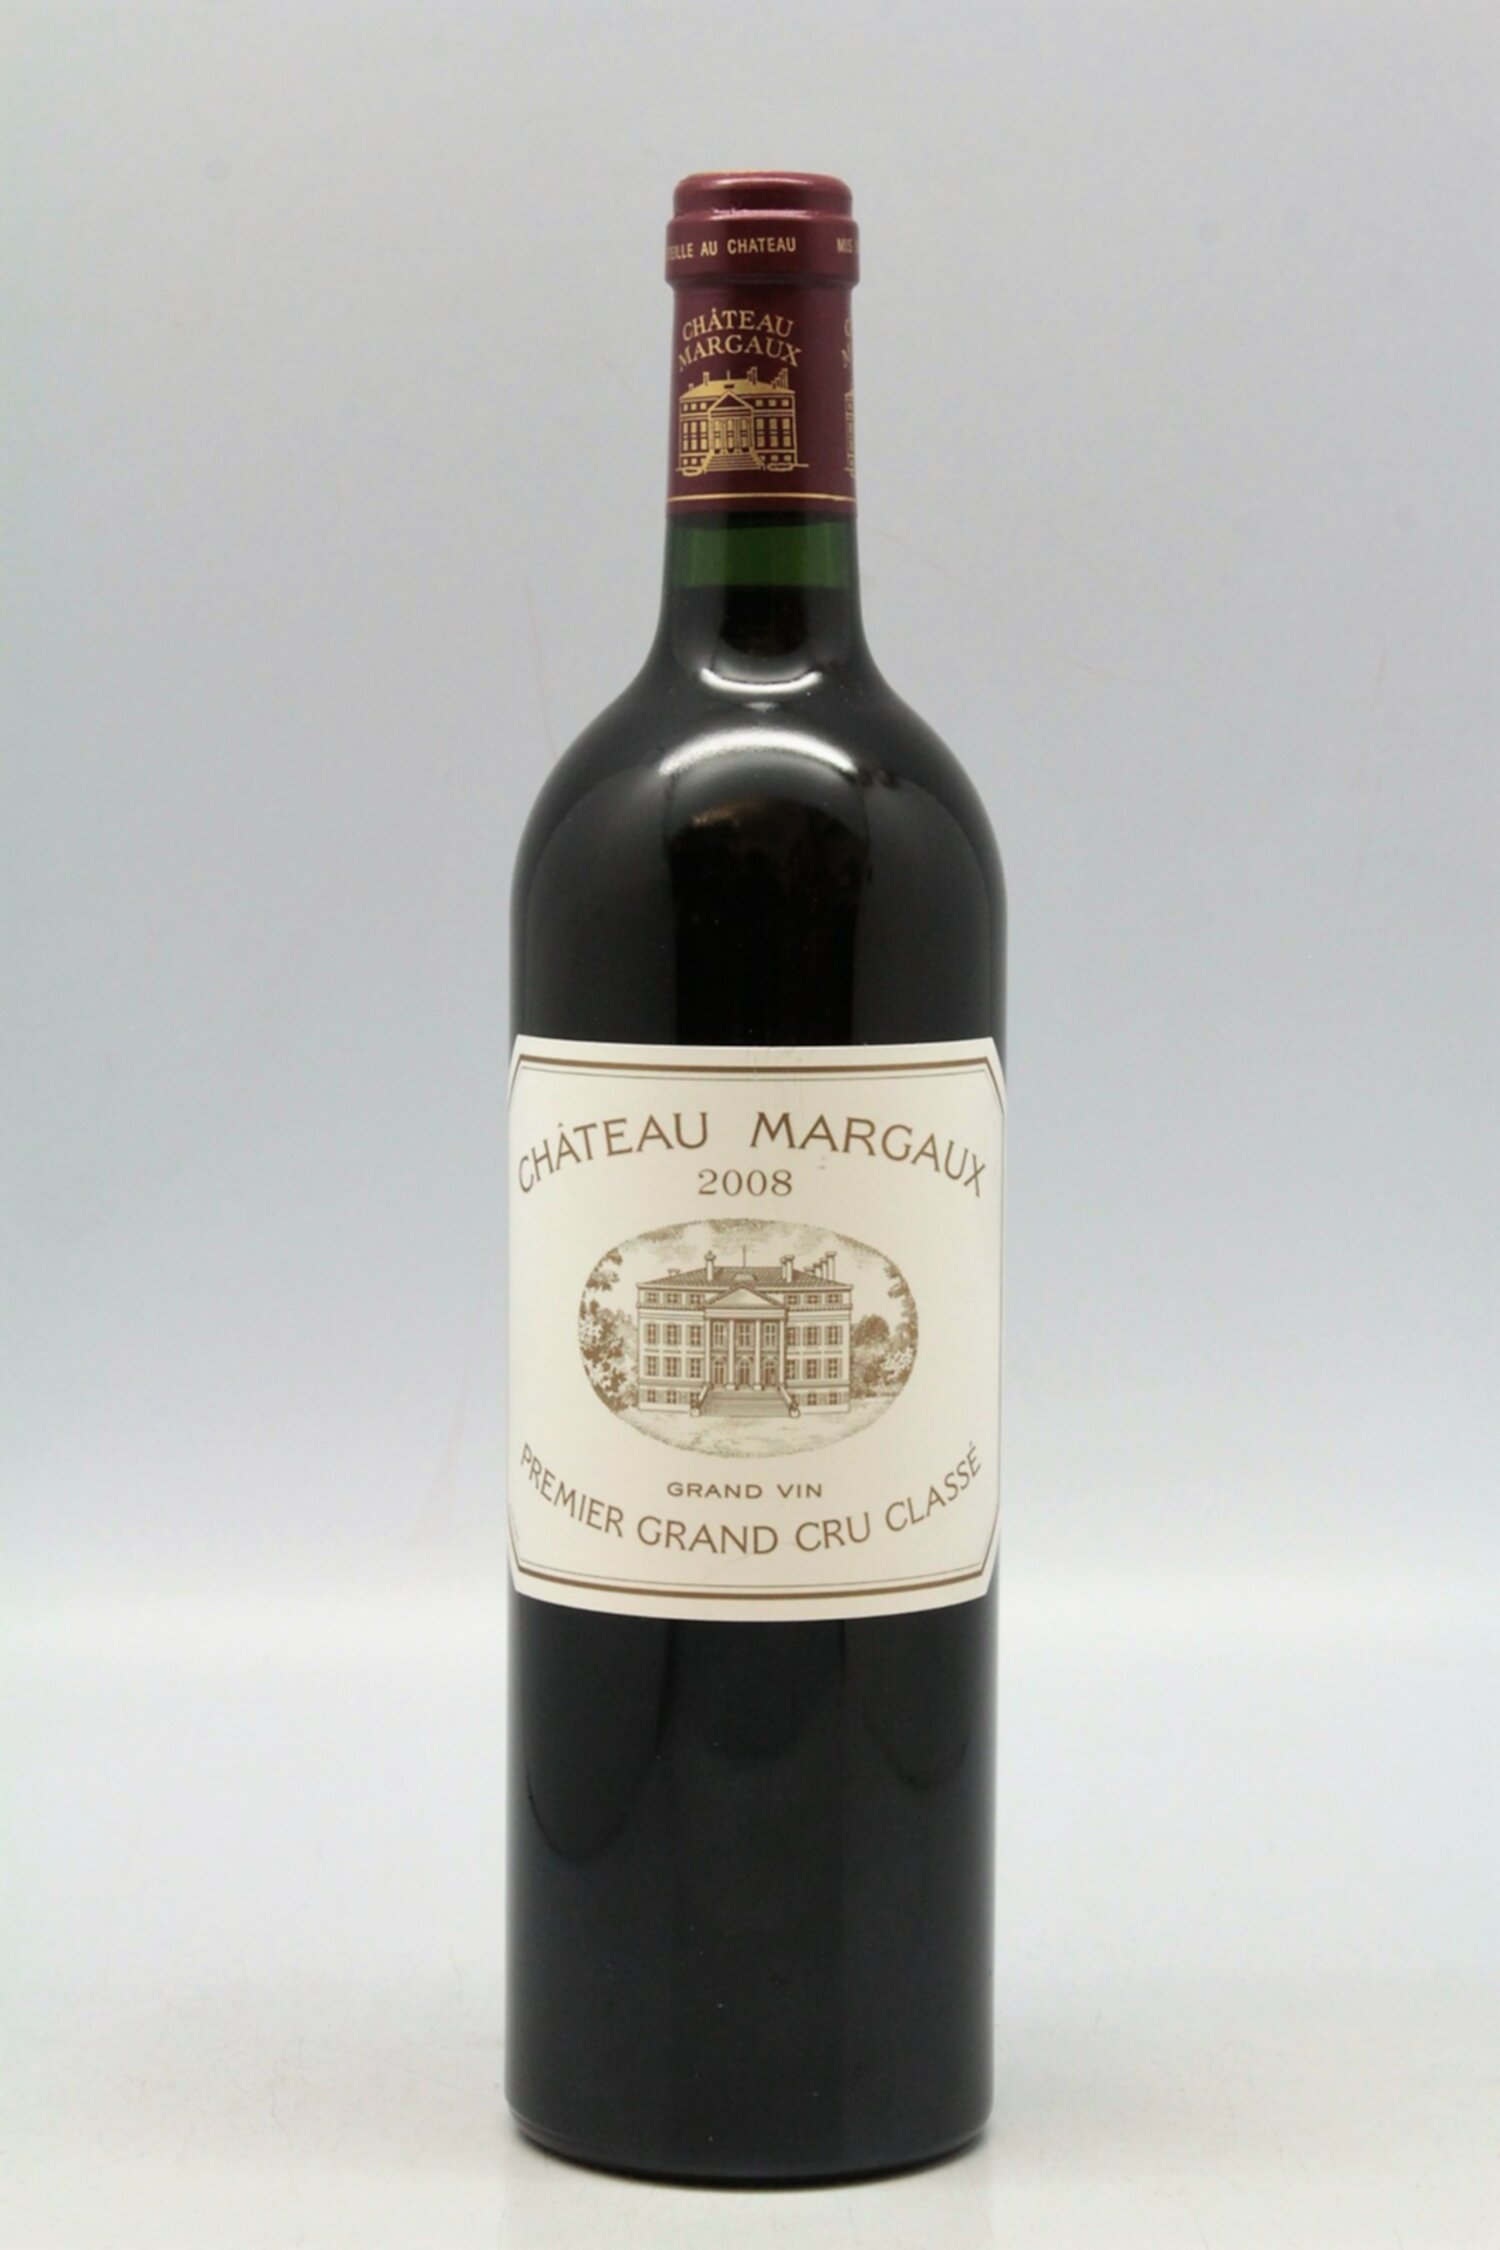 Château Margaux 2008 Vins And Millesimes